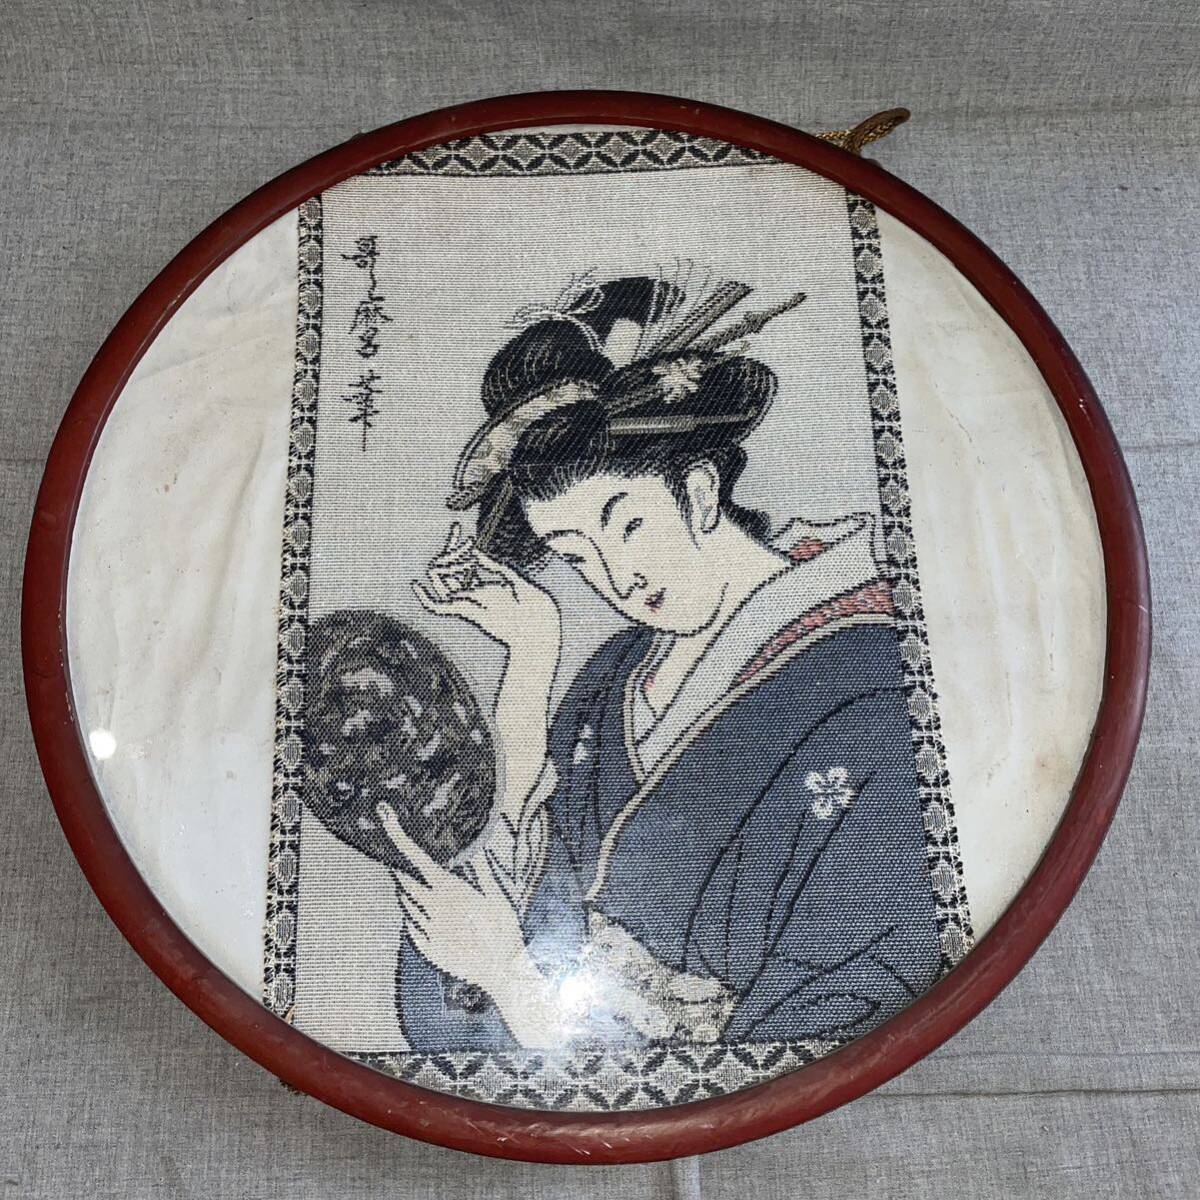 Utamaro فرشاة Kitagawa Utamaro قماش نسيج قصاصات الزجاج مؤطرة Ukiyo-e الجدار الشنق الرجعية العتيقة التحف الكائن الداخلي, تلوين, أوكييو إي, مطبوعات, صورة لامرأة جميلة